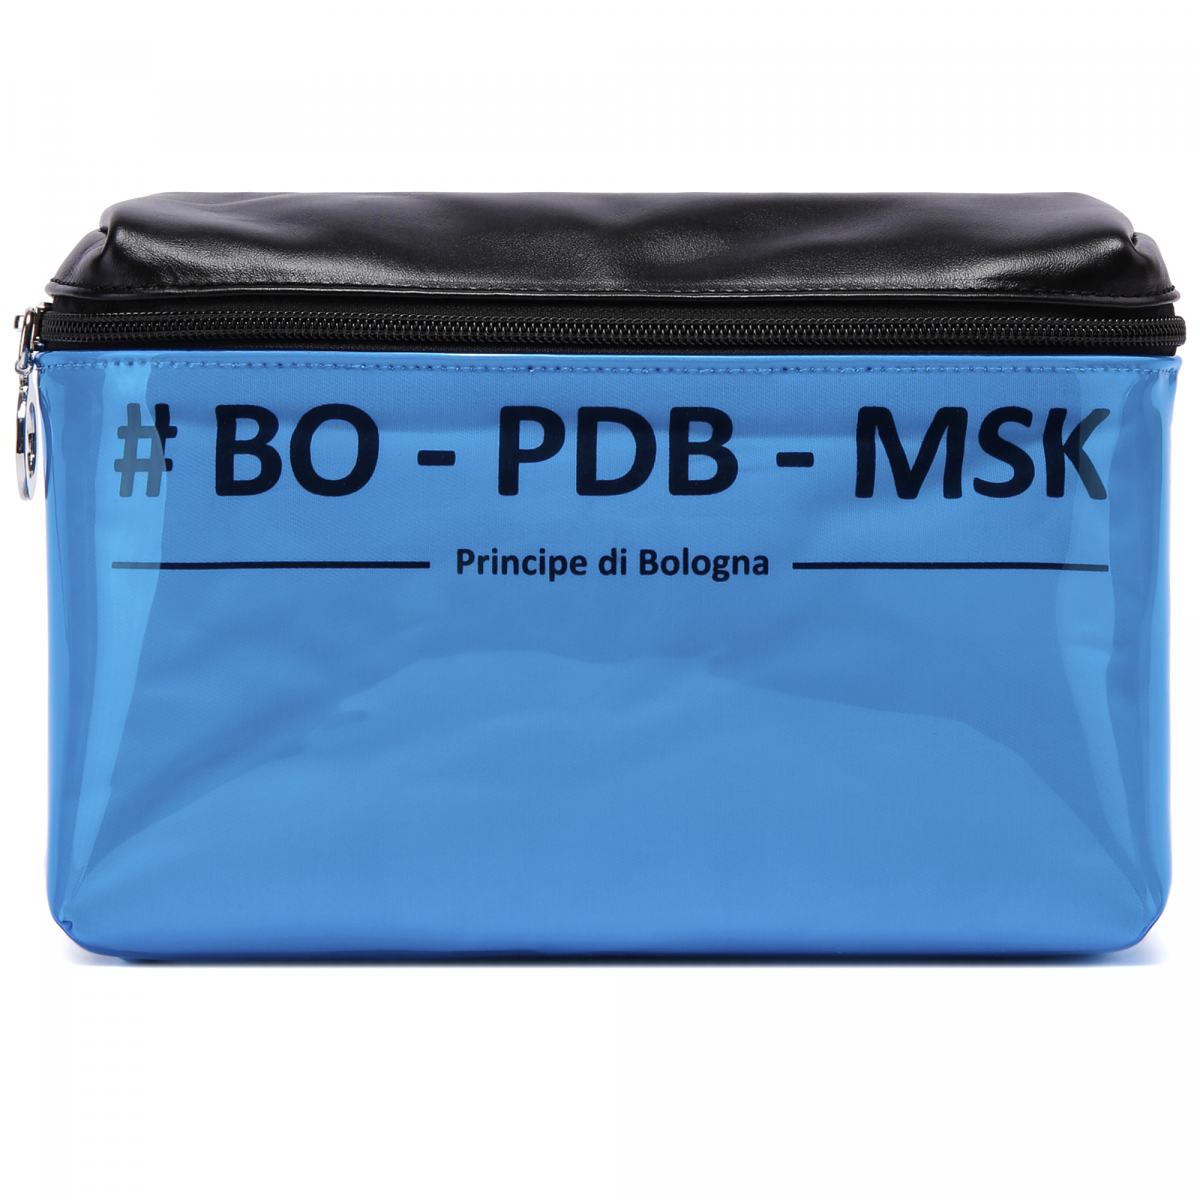 Поясная сумка Principe Di Bologna